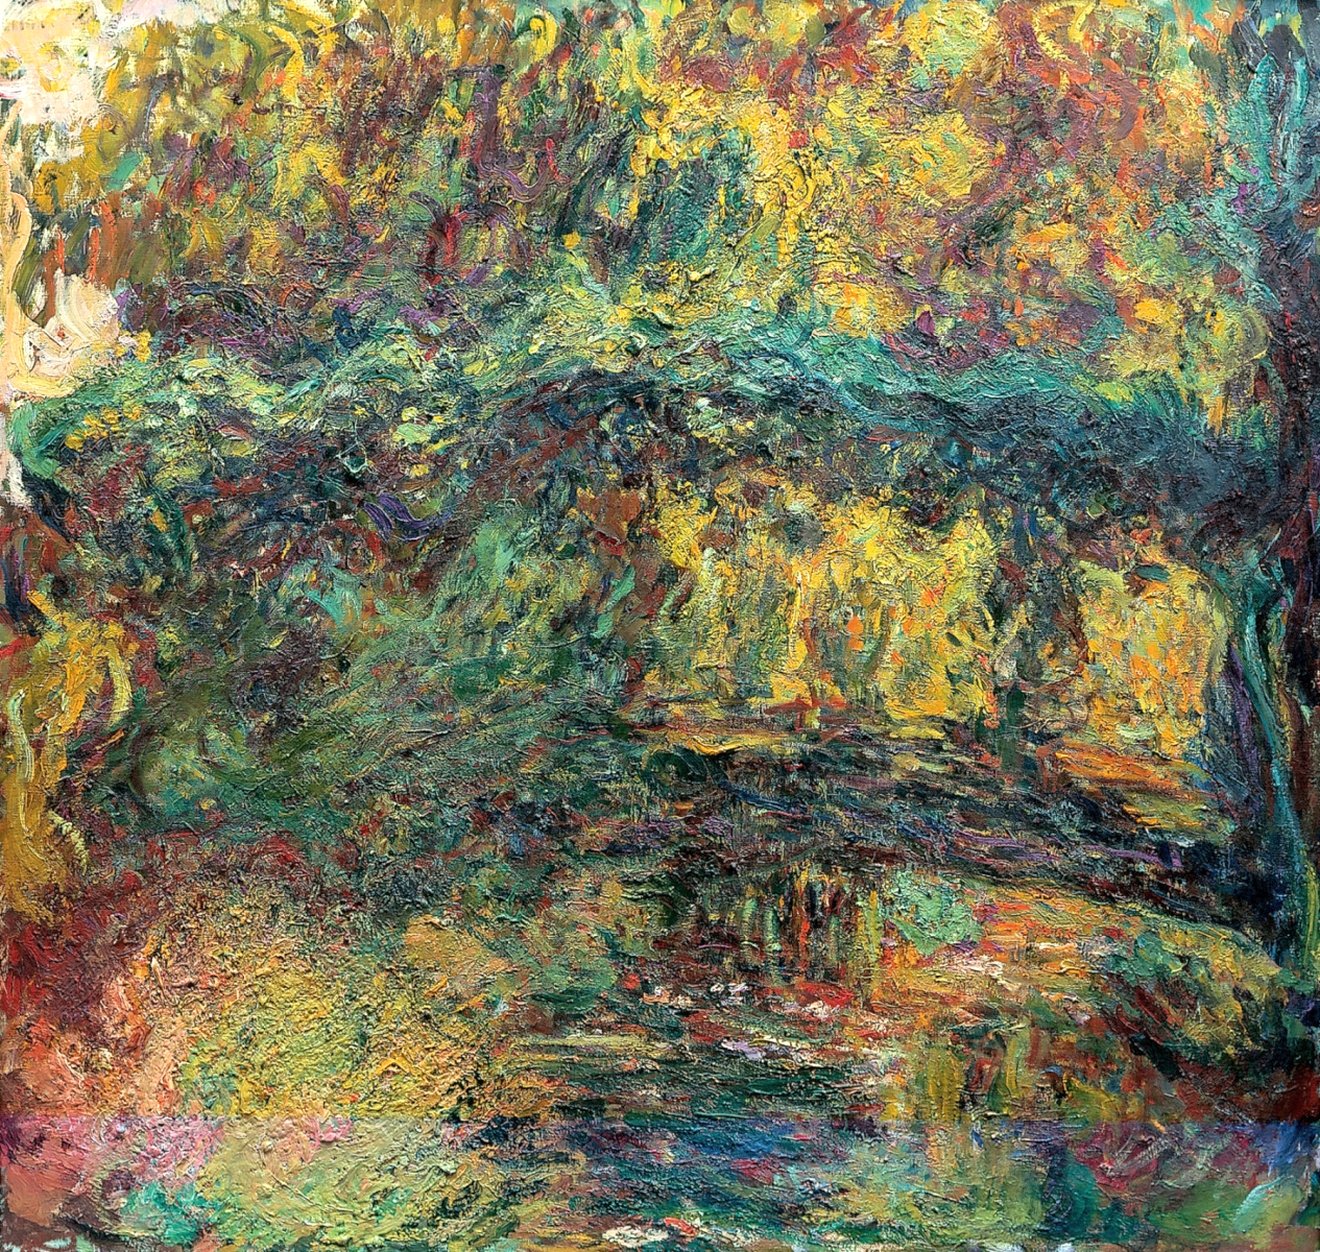 Claude+Monet-1840-1926 (465).jpg